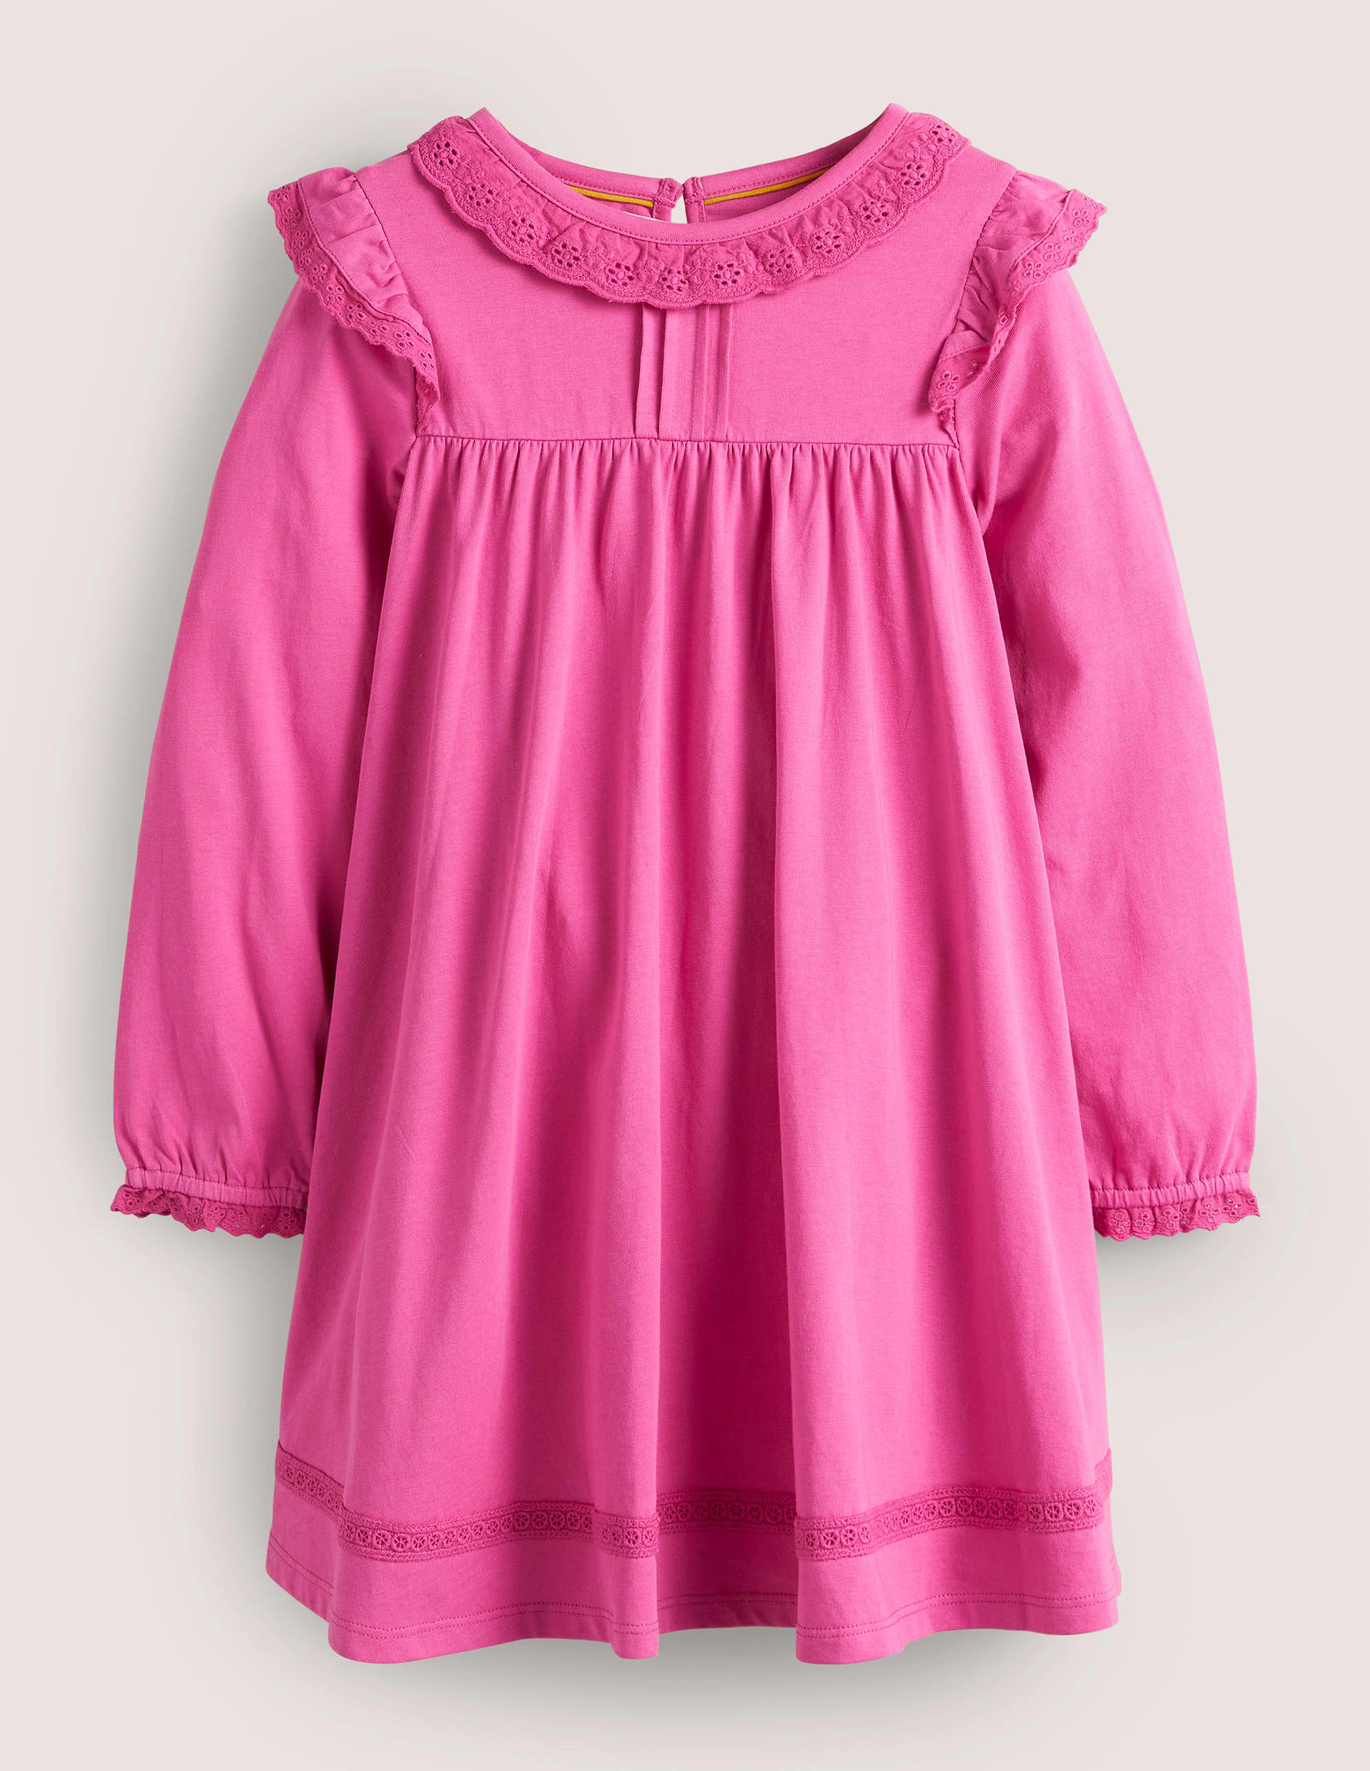 Boden Broderie Frill Dress - Tickled Pink